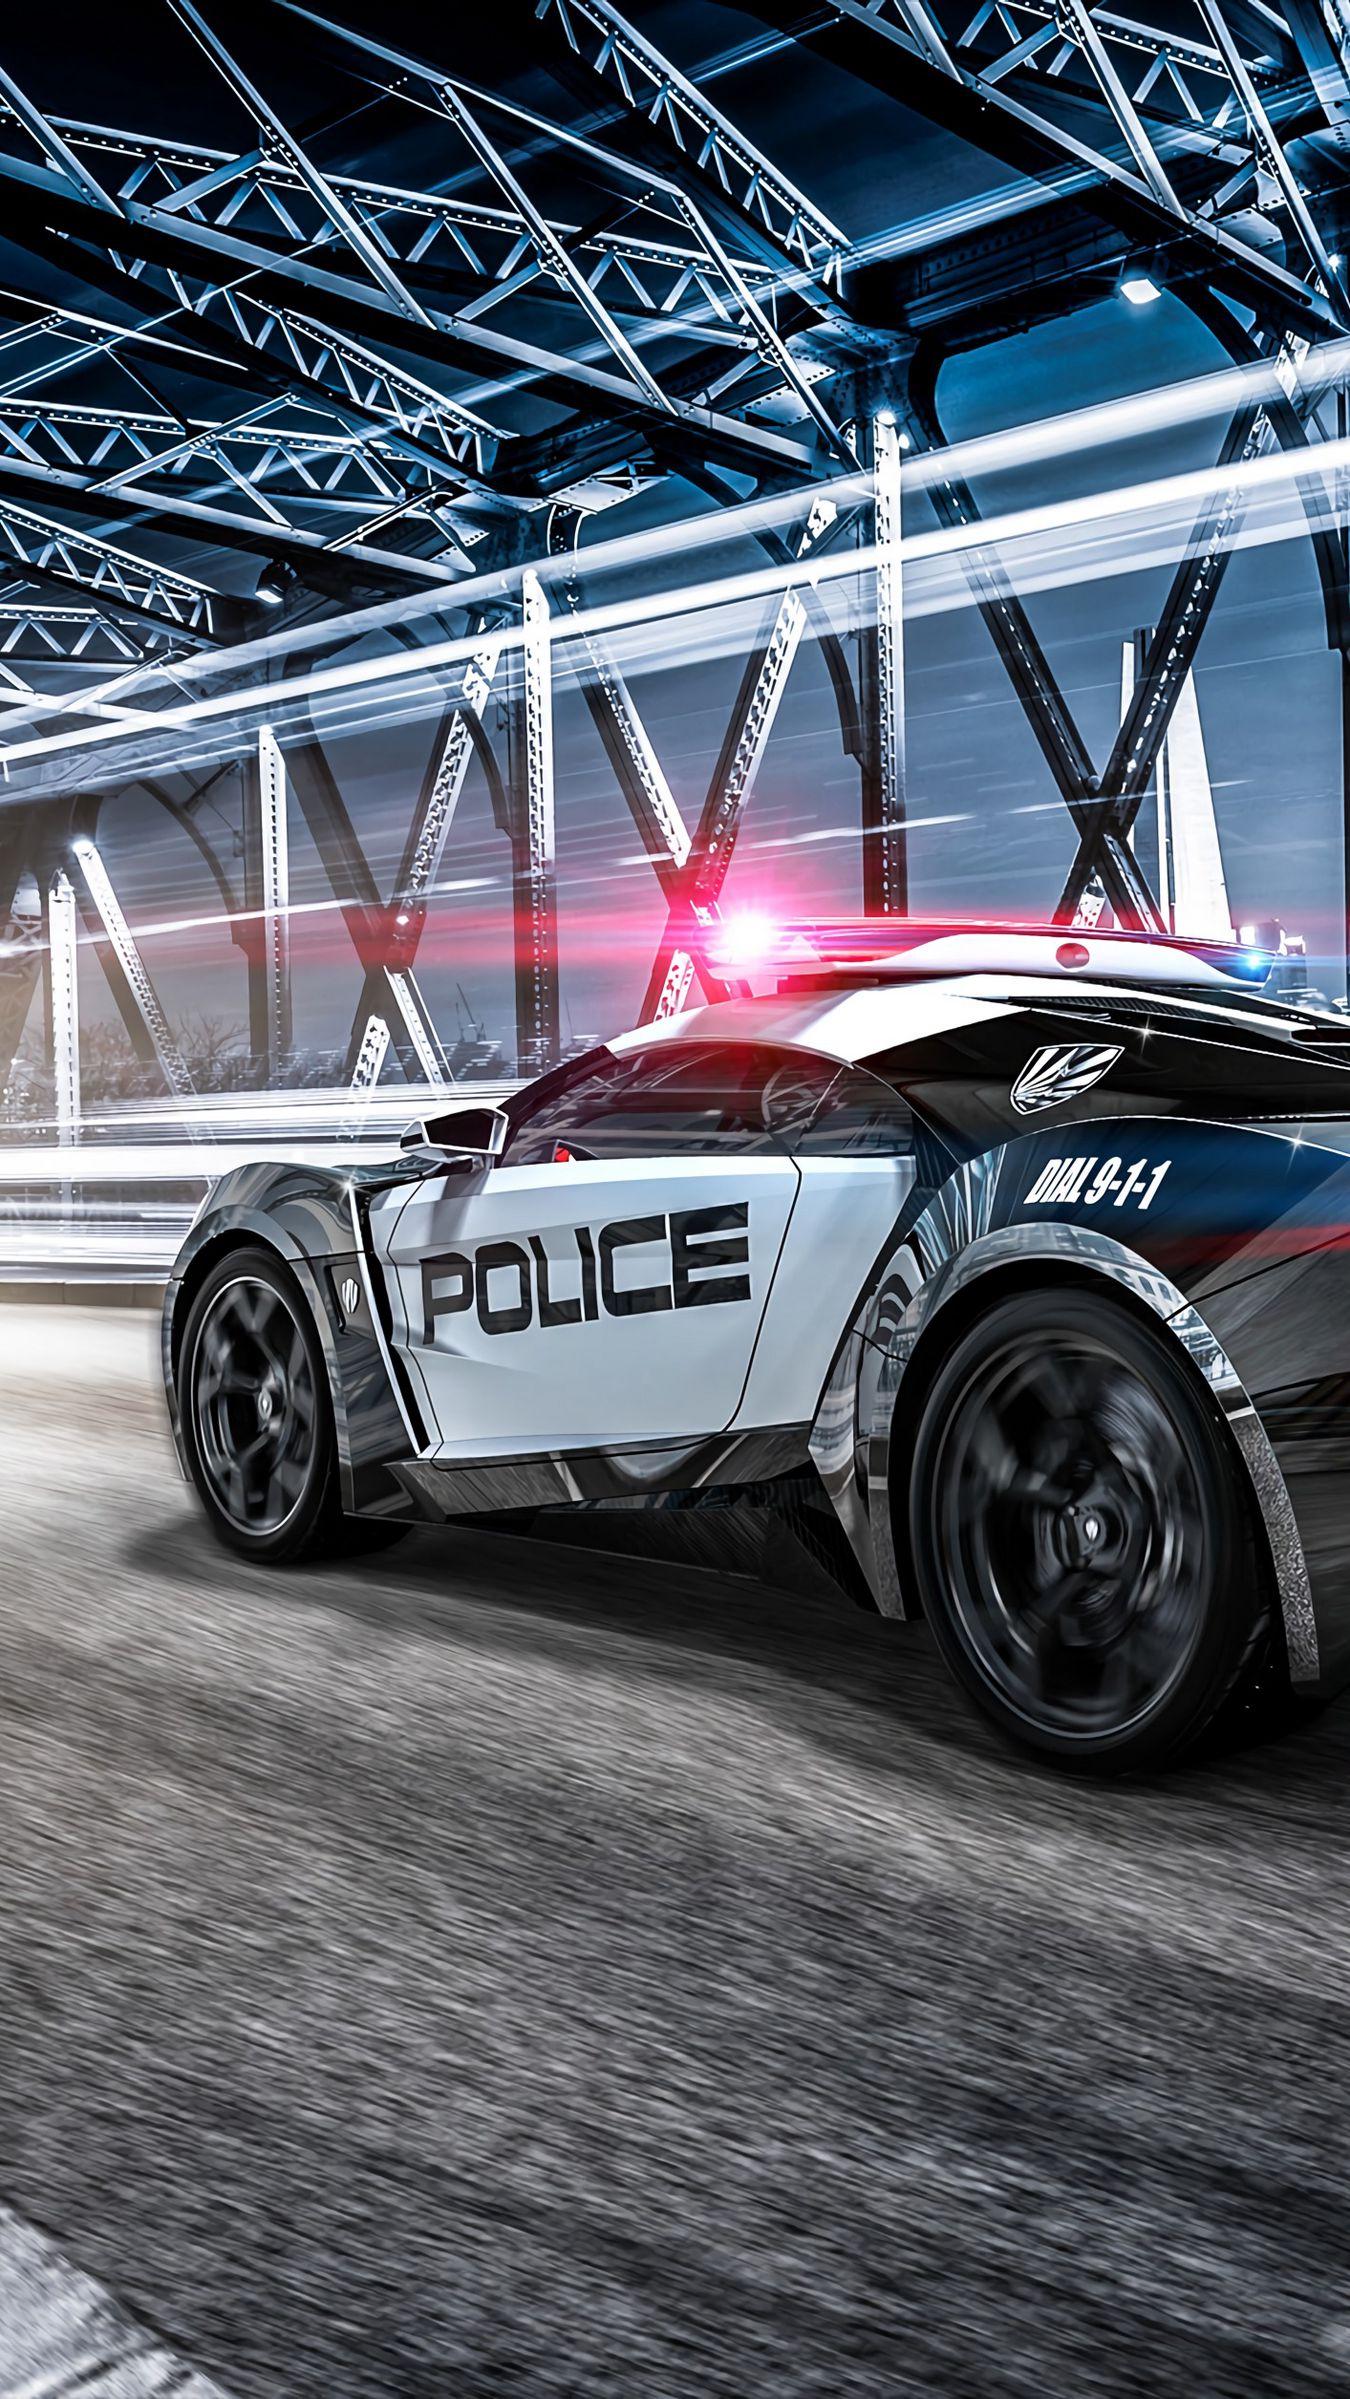 Download wallpaper 1350x2400 car police sportscar supercar